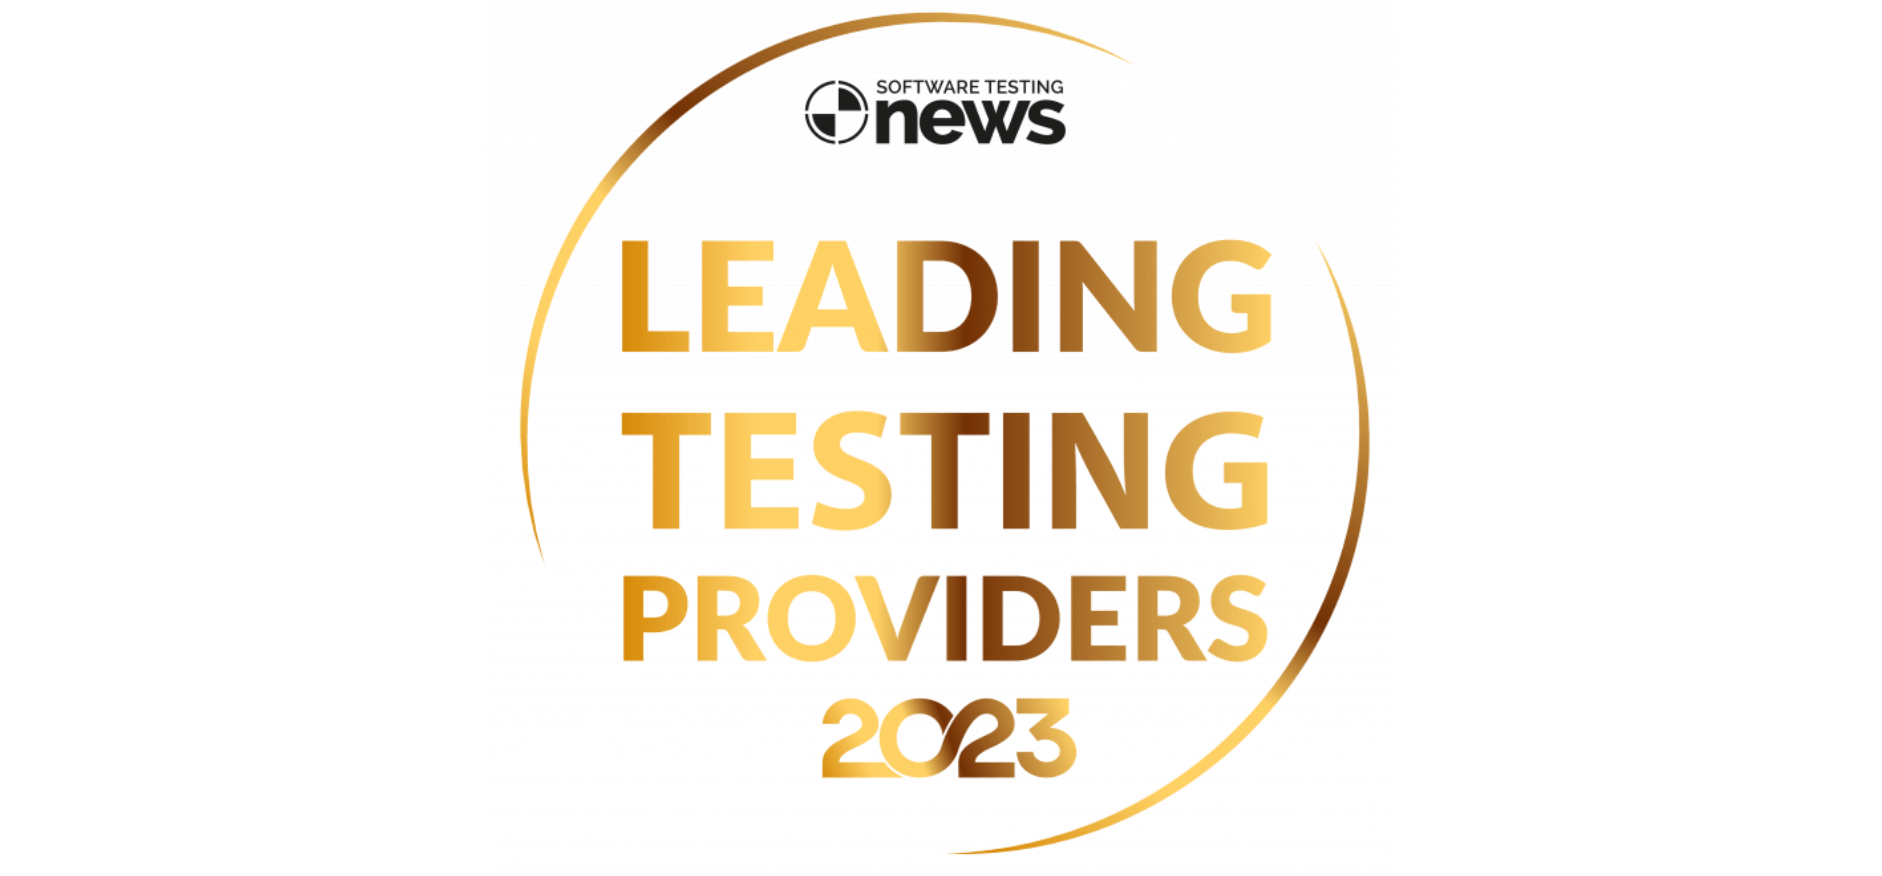 Leading testing providers